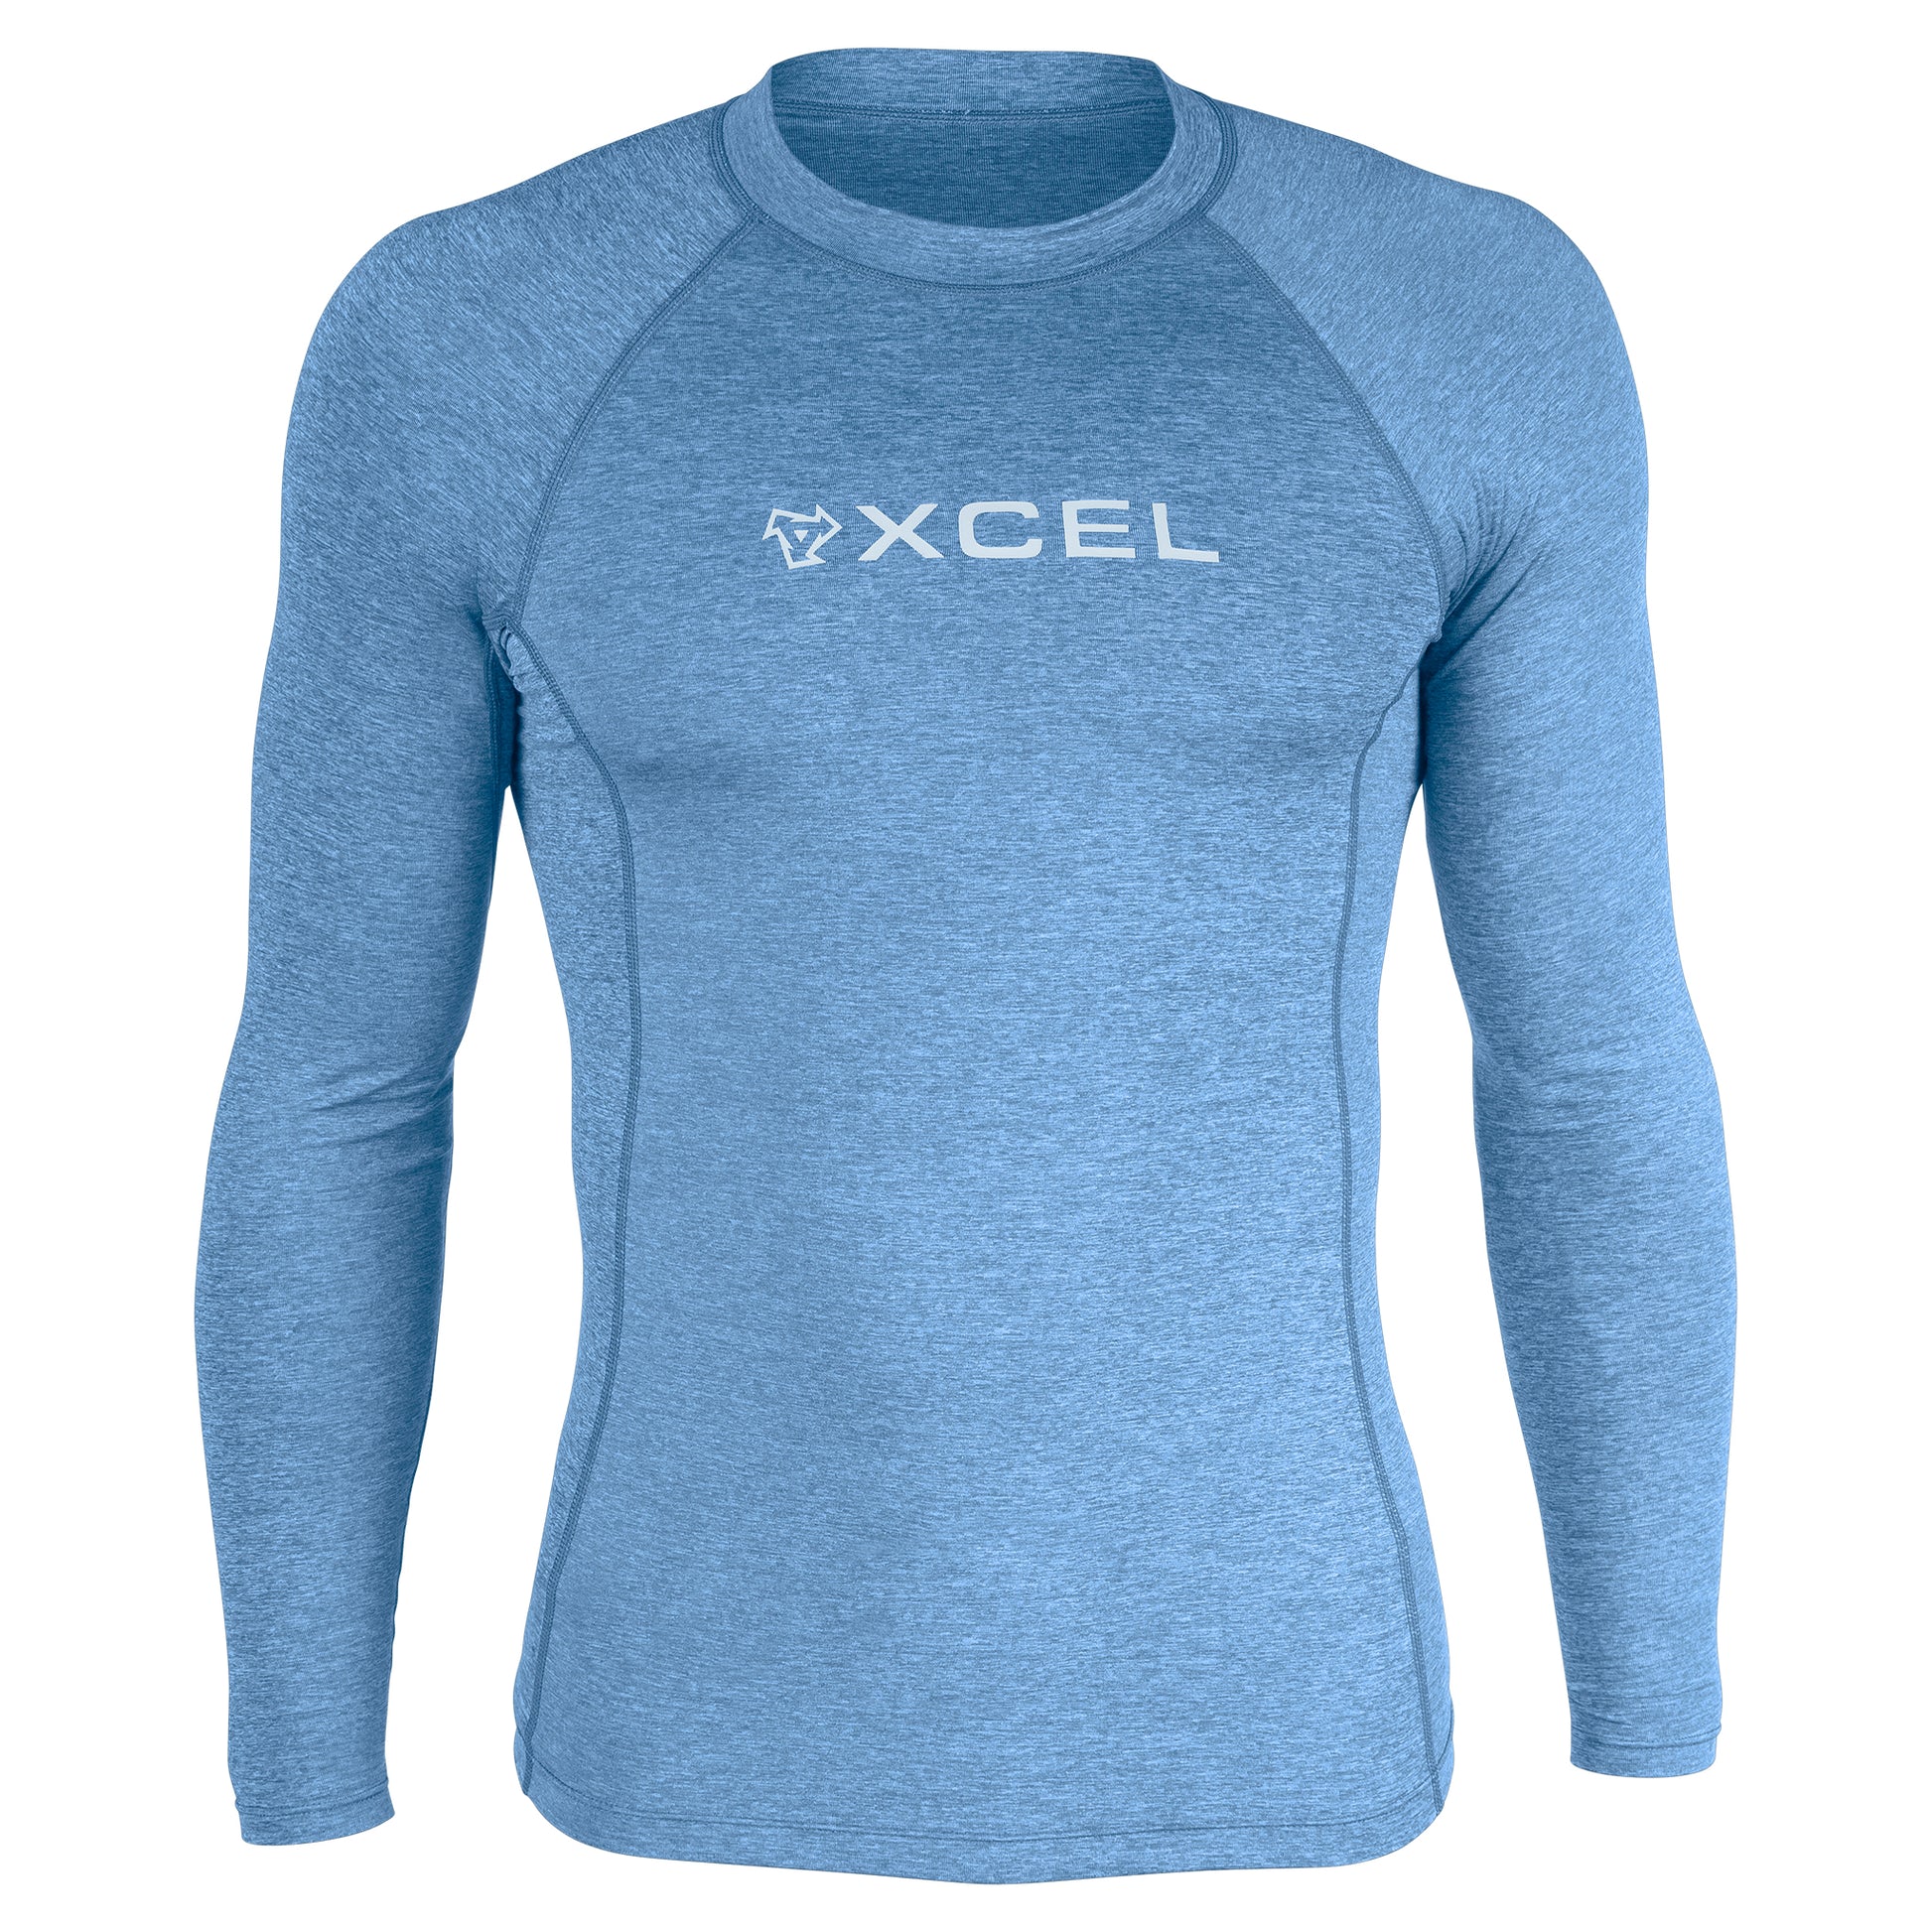 Men's Premium Stretch Long Sleeve Performance Fit UV Top – Xcel